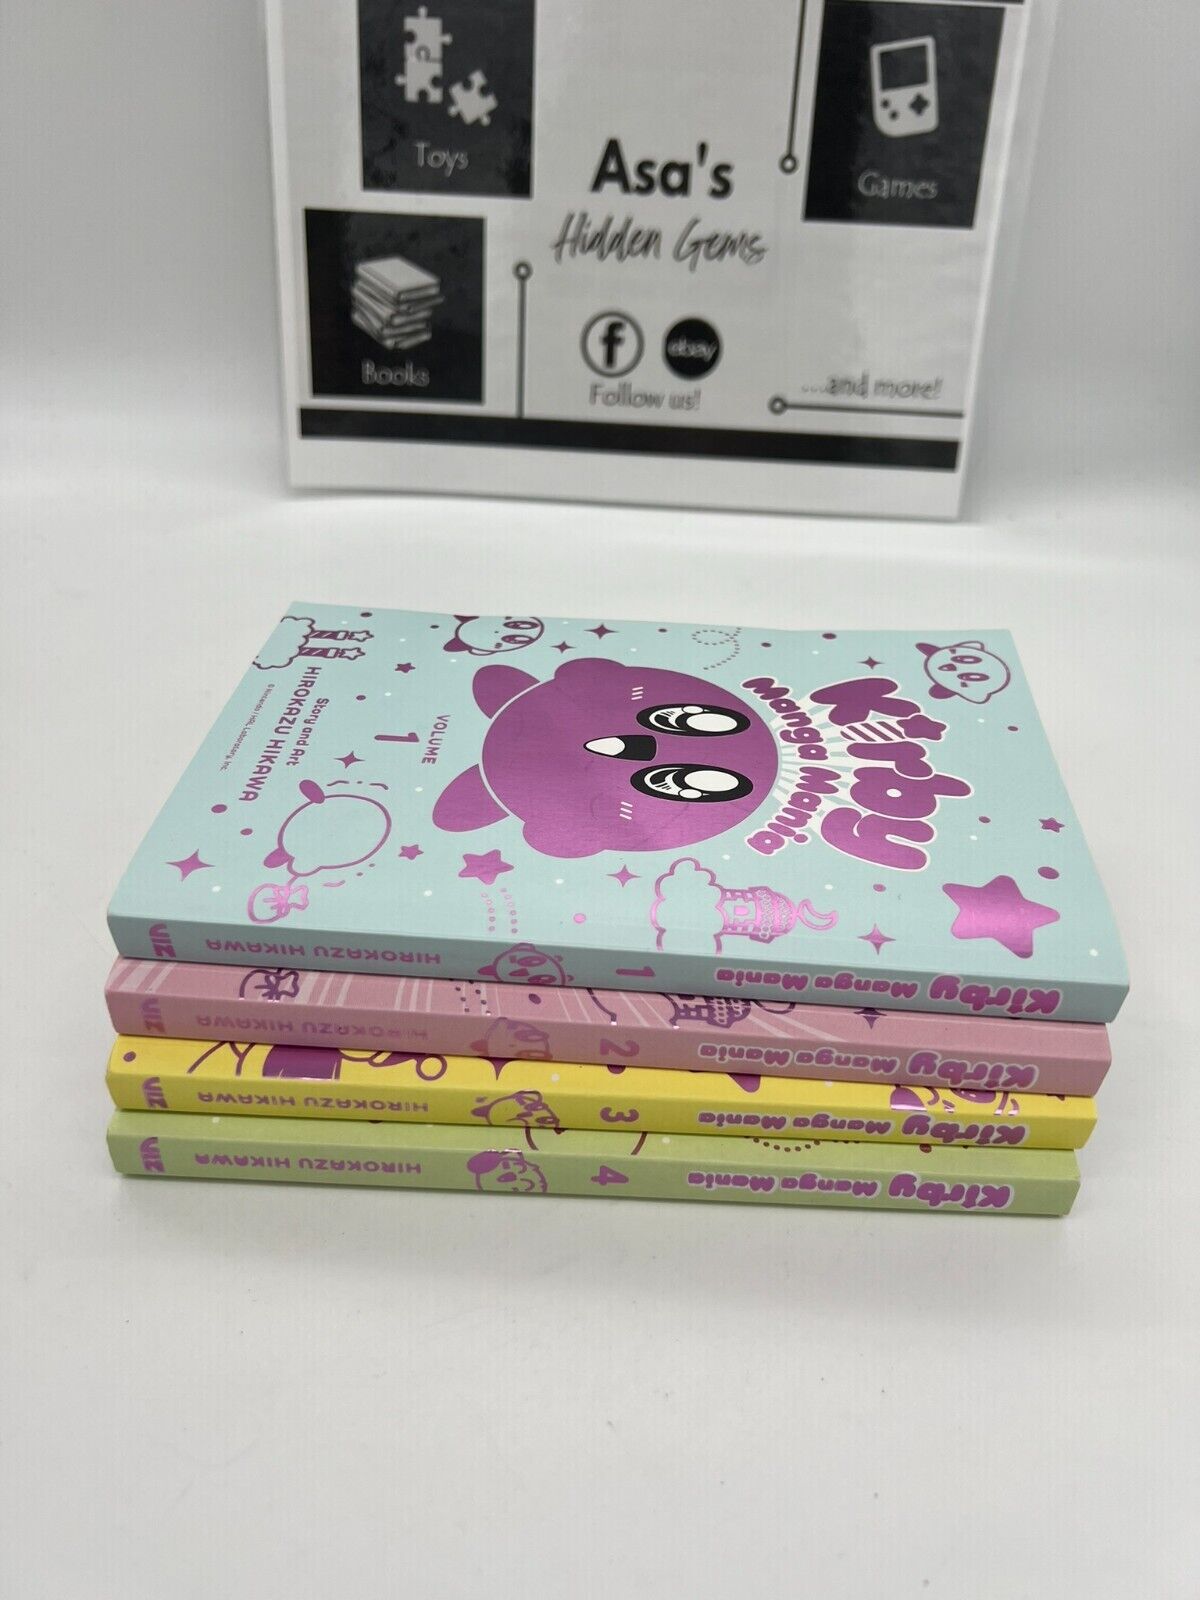 Kirby Manga Mania, Vol. 1,2,3,4 by Hirokazu Hikawa (English) Paperback Book